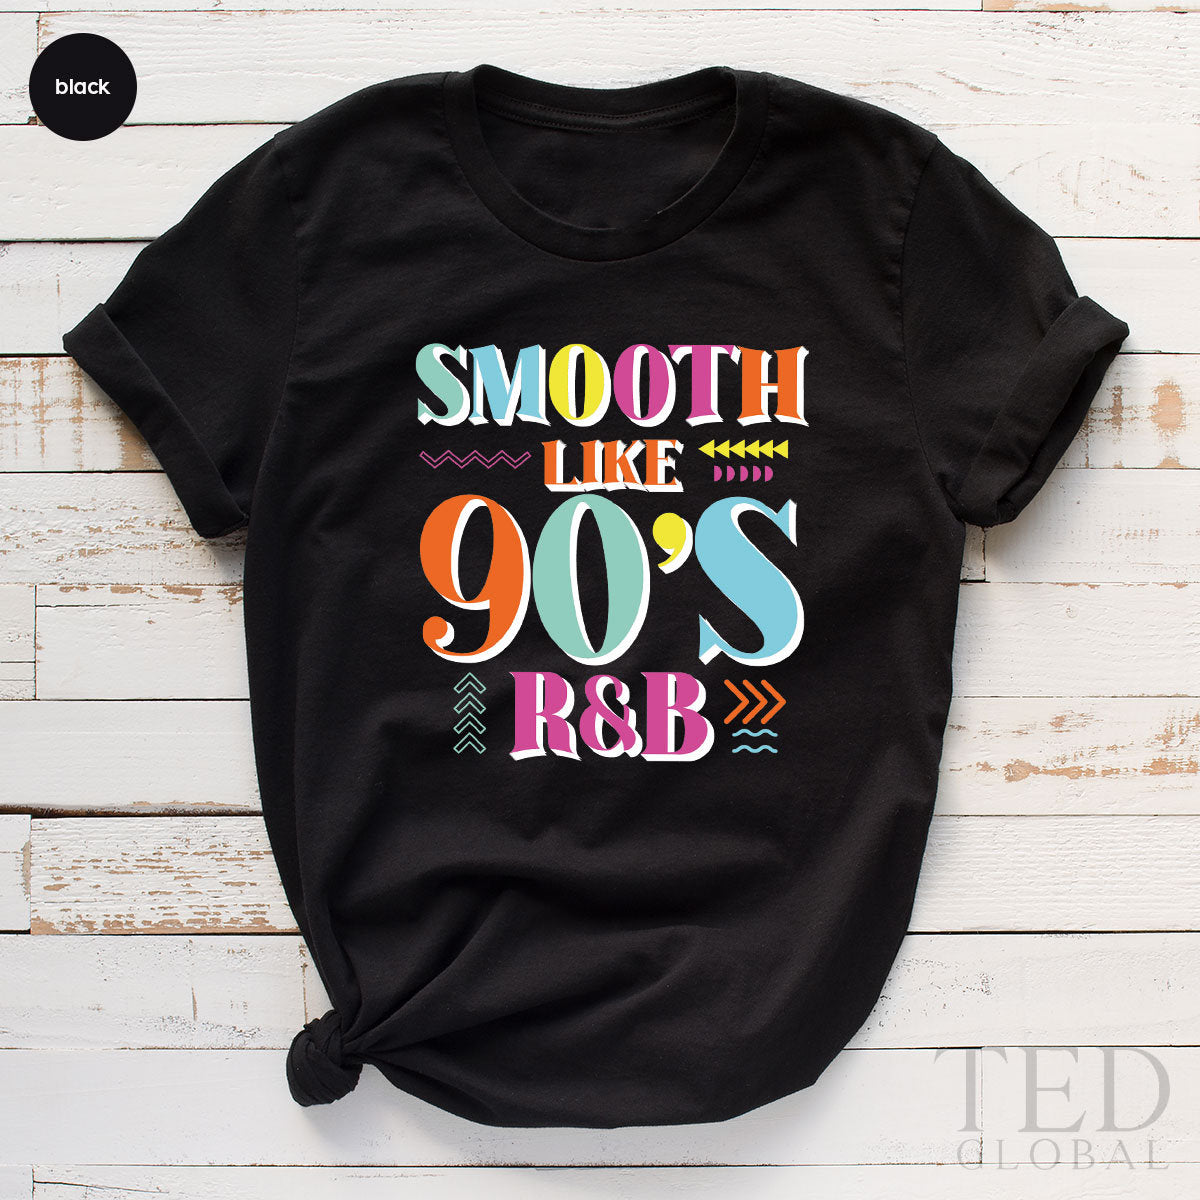 Cute 90's R&B T-Shirt, Vintage 80-90 T Shirt, 90s Music Shirts, Historical Shirt, Music Lover TShirt, Gift For 90's Birthday - Fastdeliverytees.com